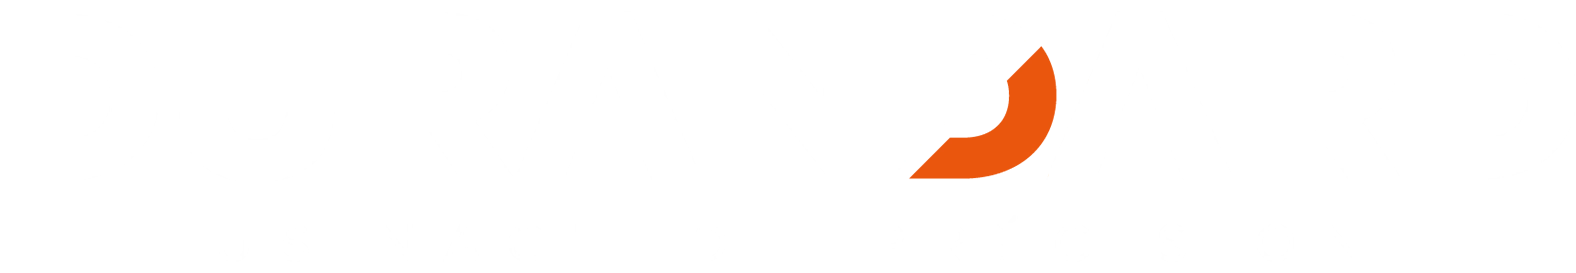 DURANDARD_logo_blanc-orange copie